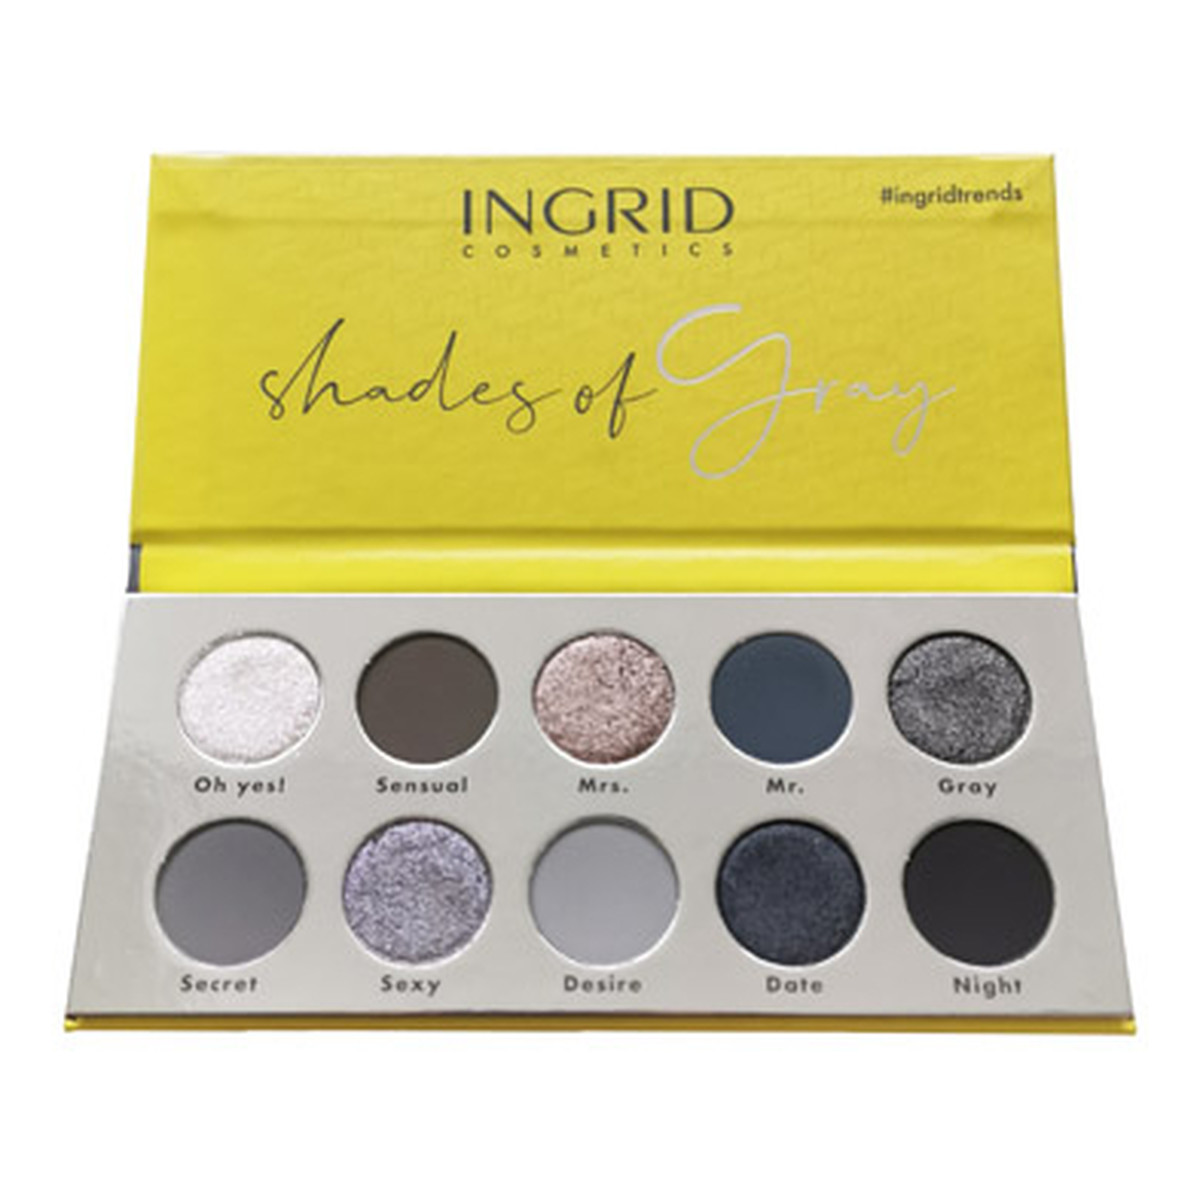 Ingrid Shades of Gray paleta cieni do powiek 15g